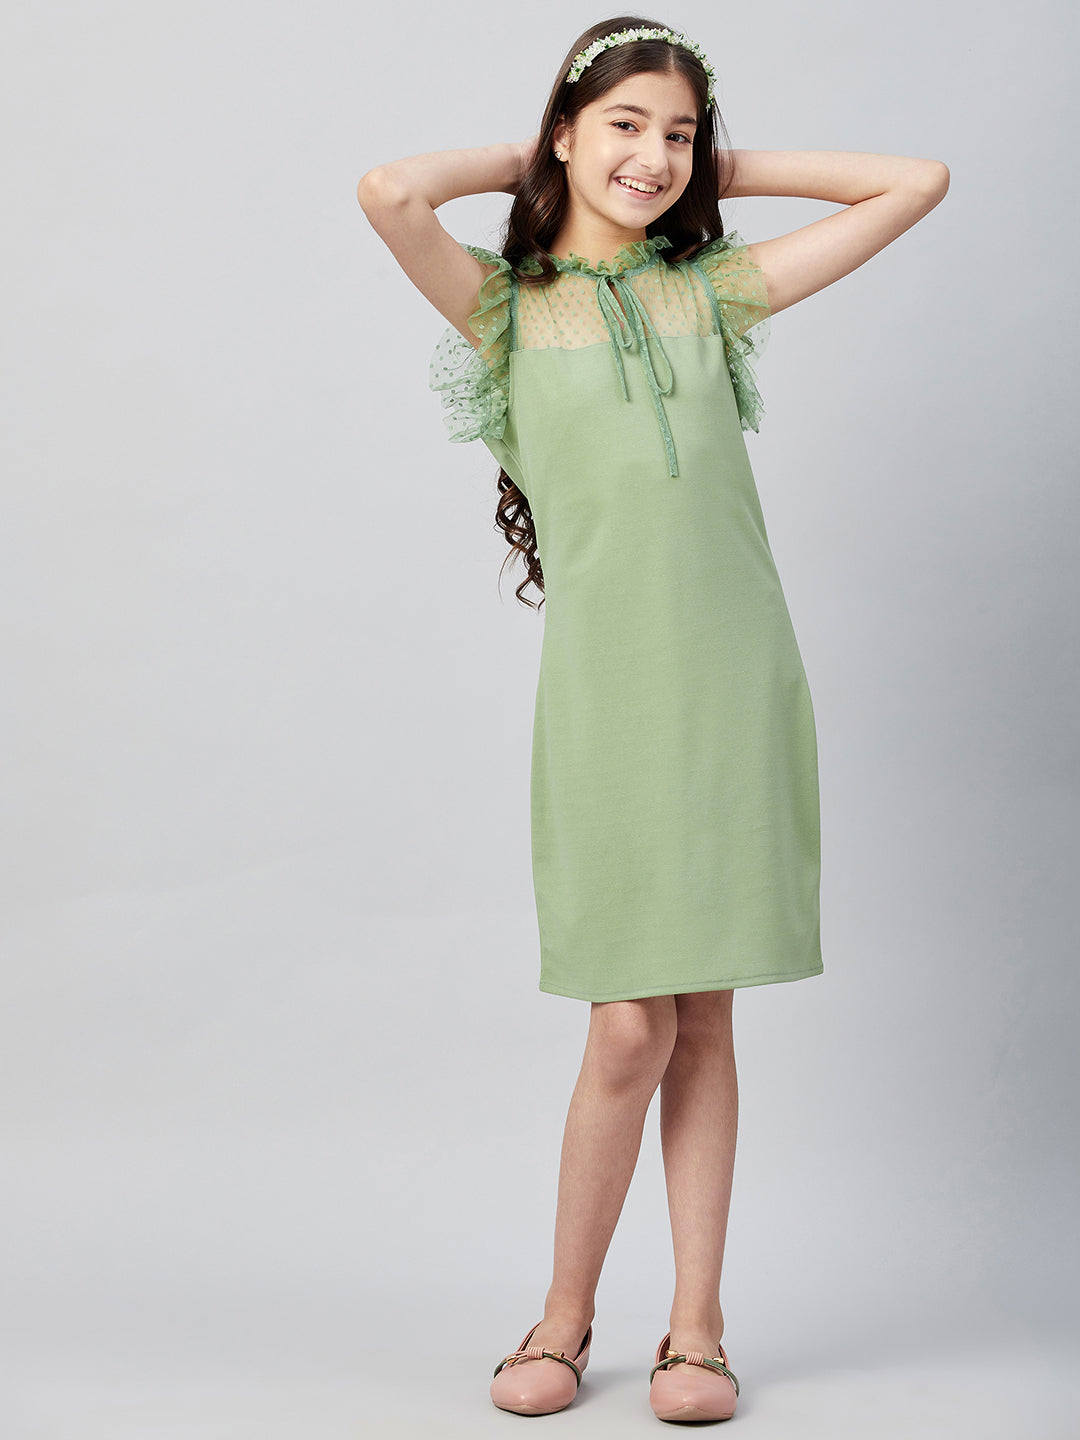 Athena Girl Green Off-Shoulder A-Line Dress - Athena Lifestyle